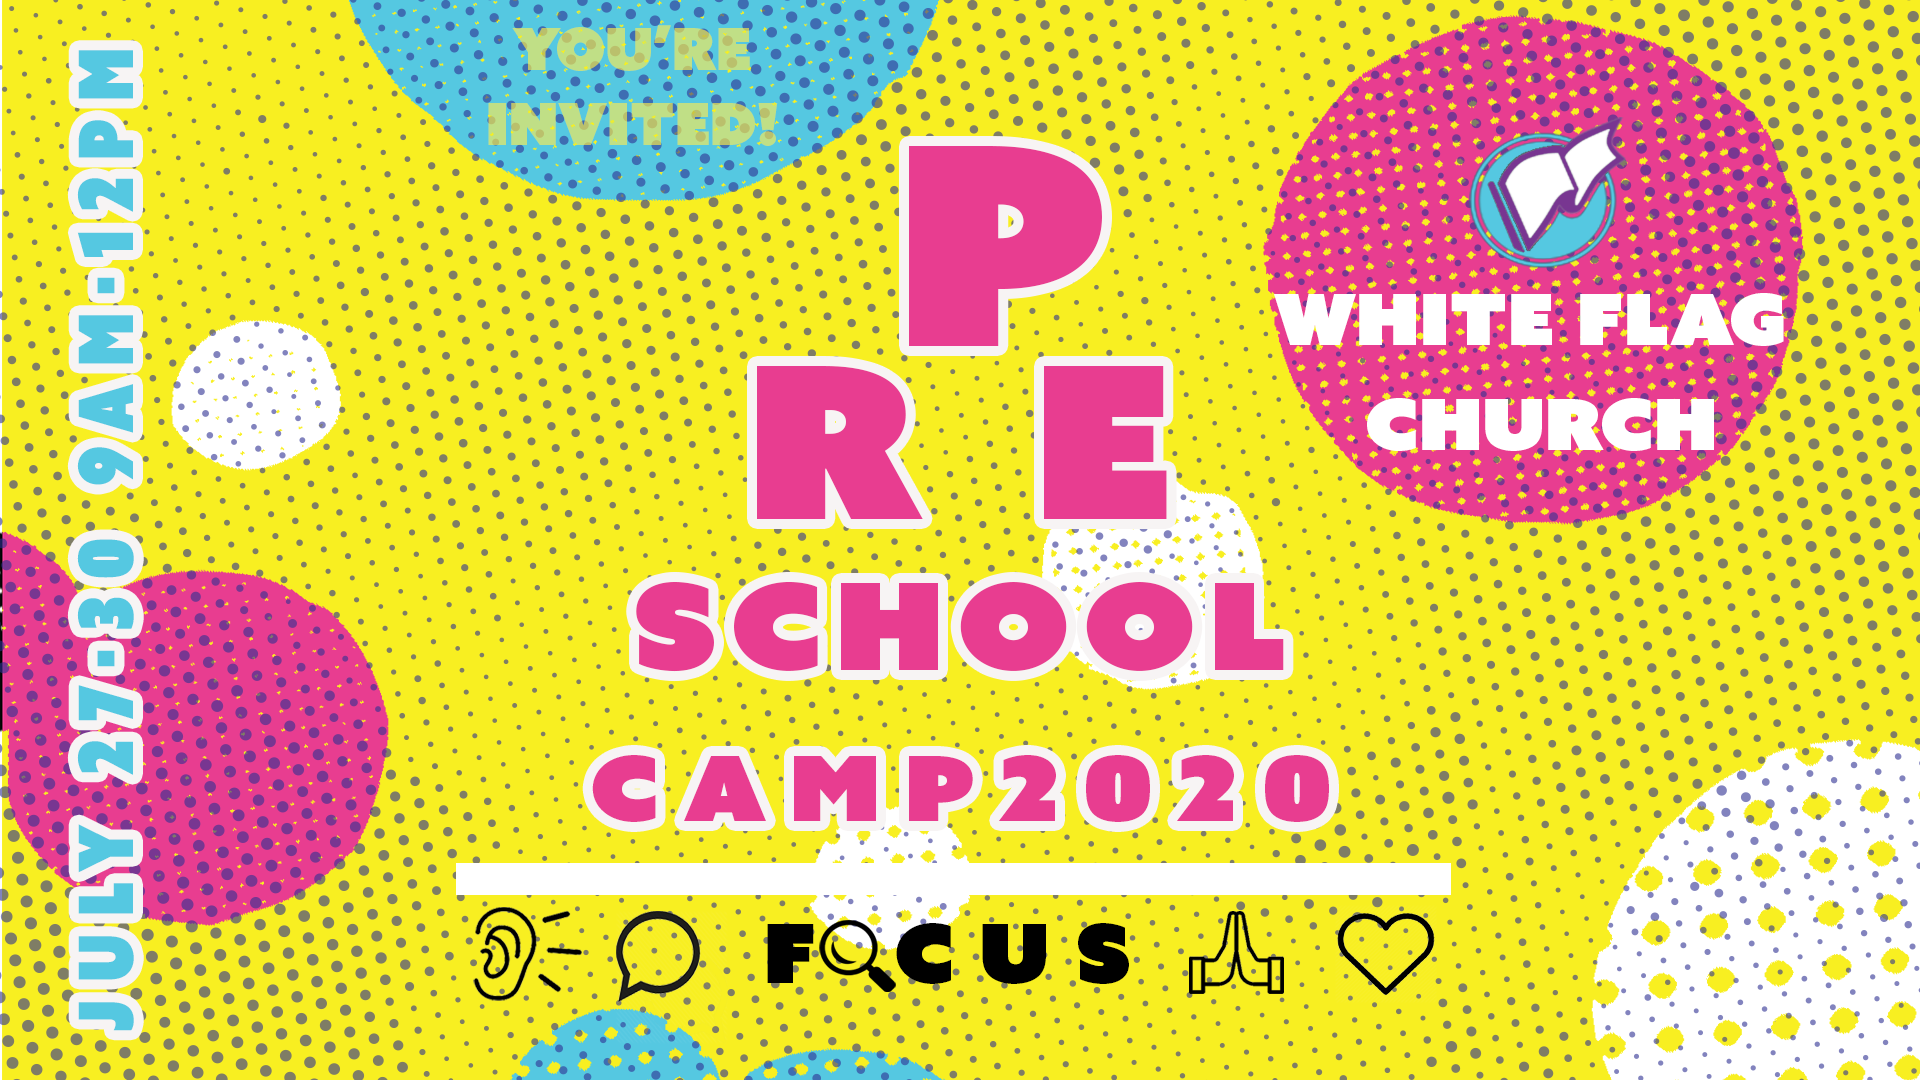 Preschool Camp 2020 1920x1080 image